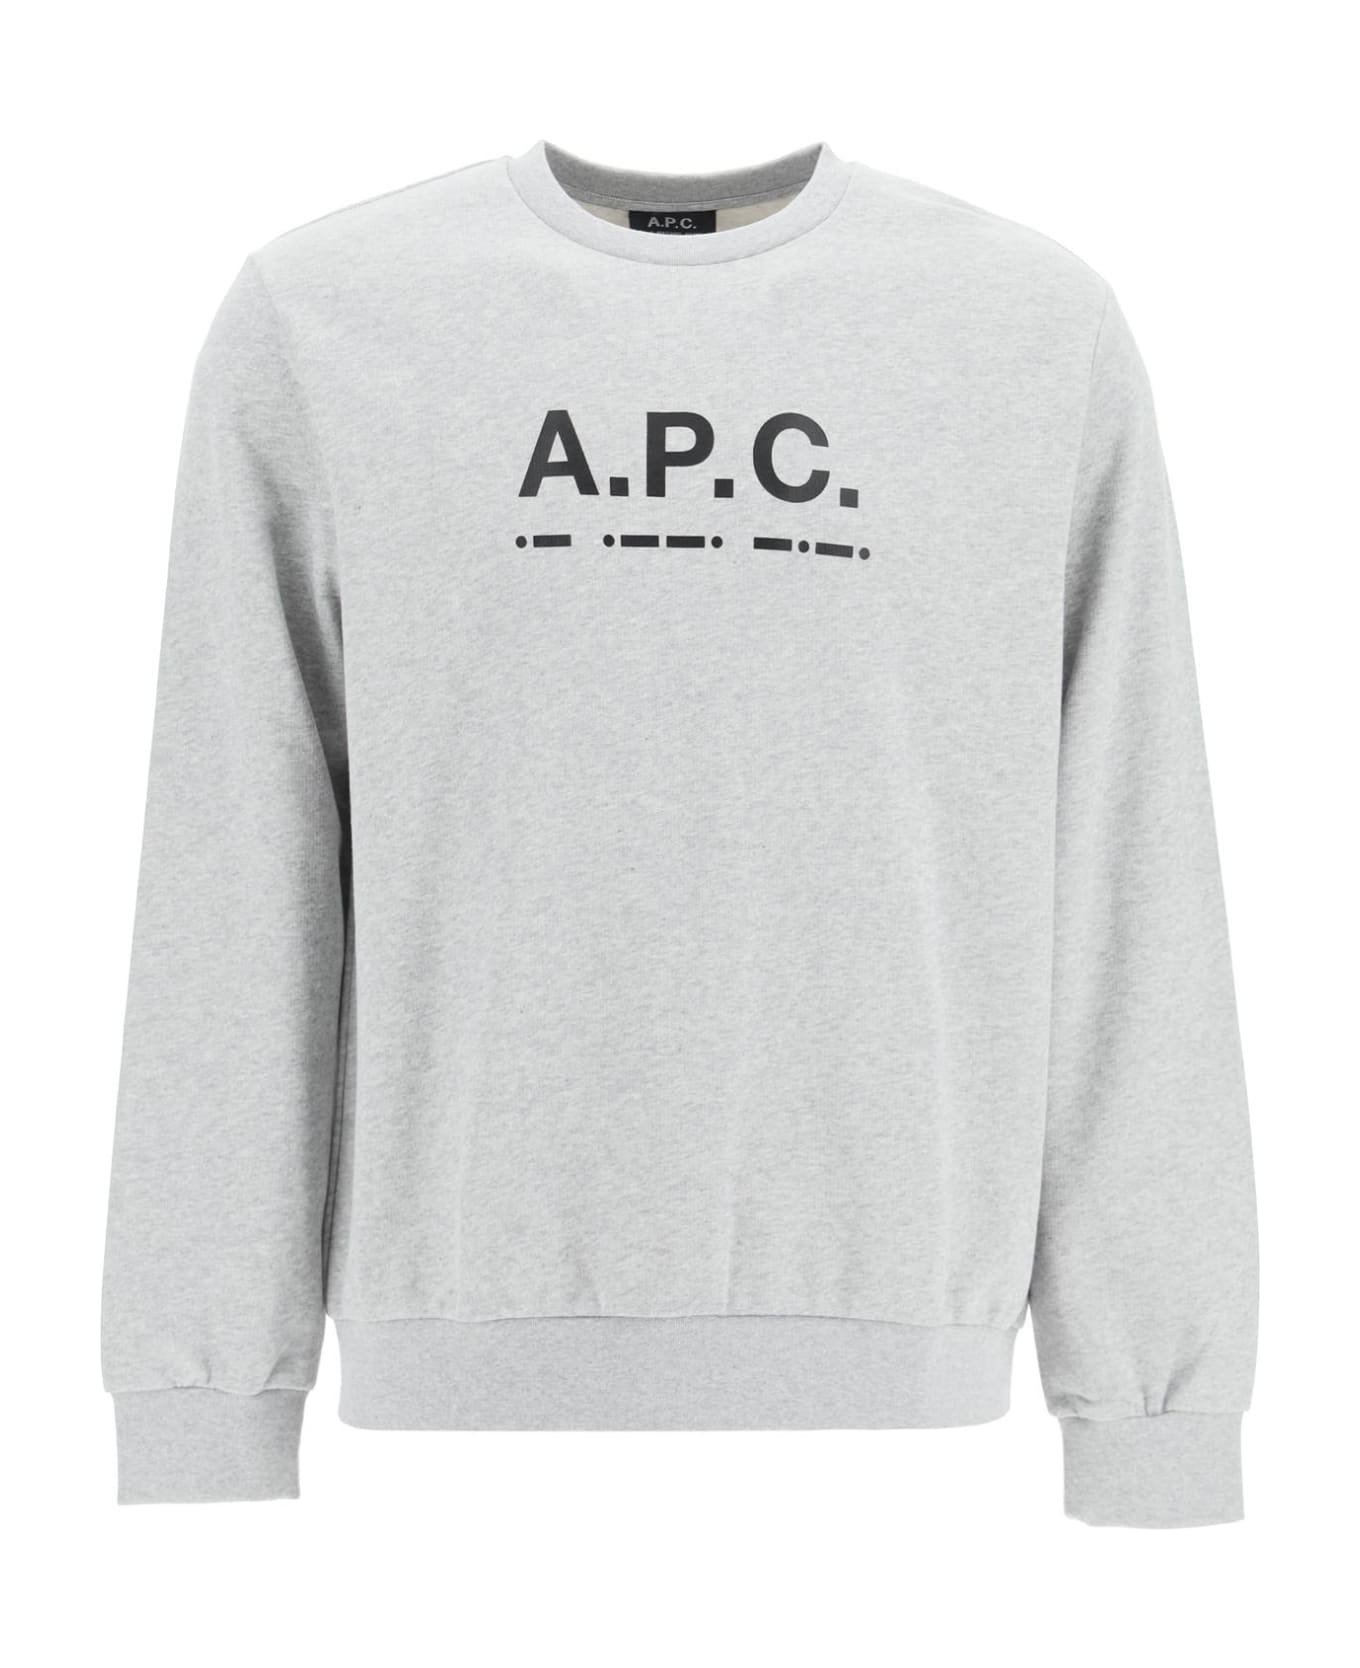 A.P.C. Franco Sweatshirt - GRIS CHINE (Grey)